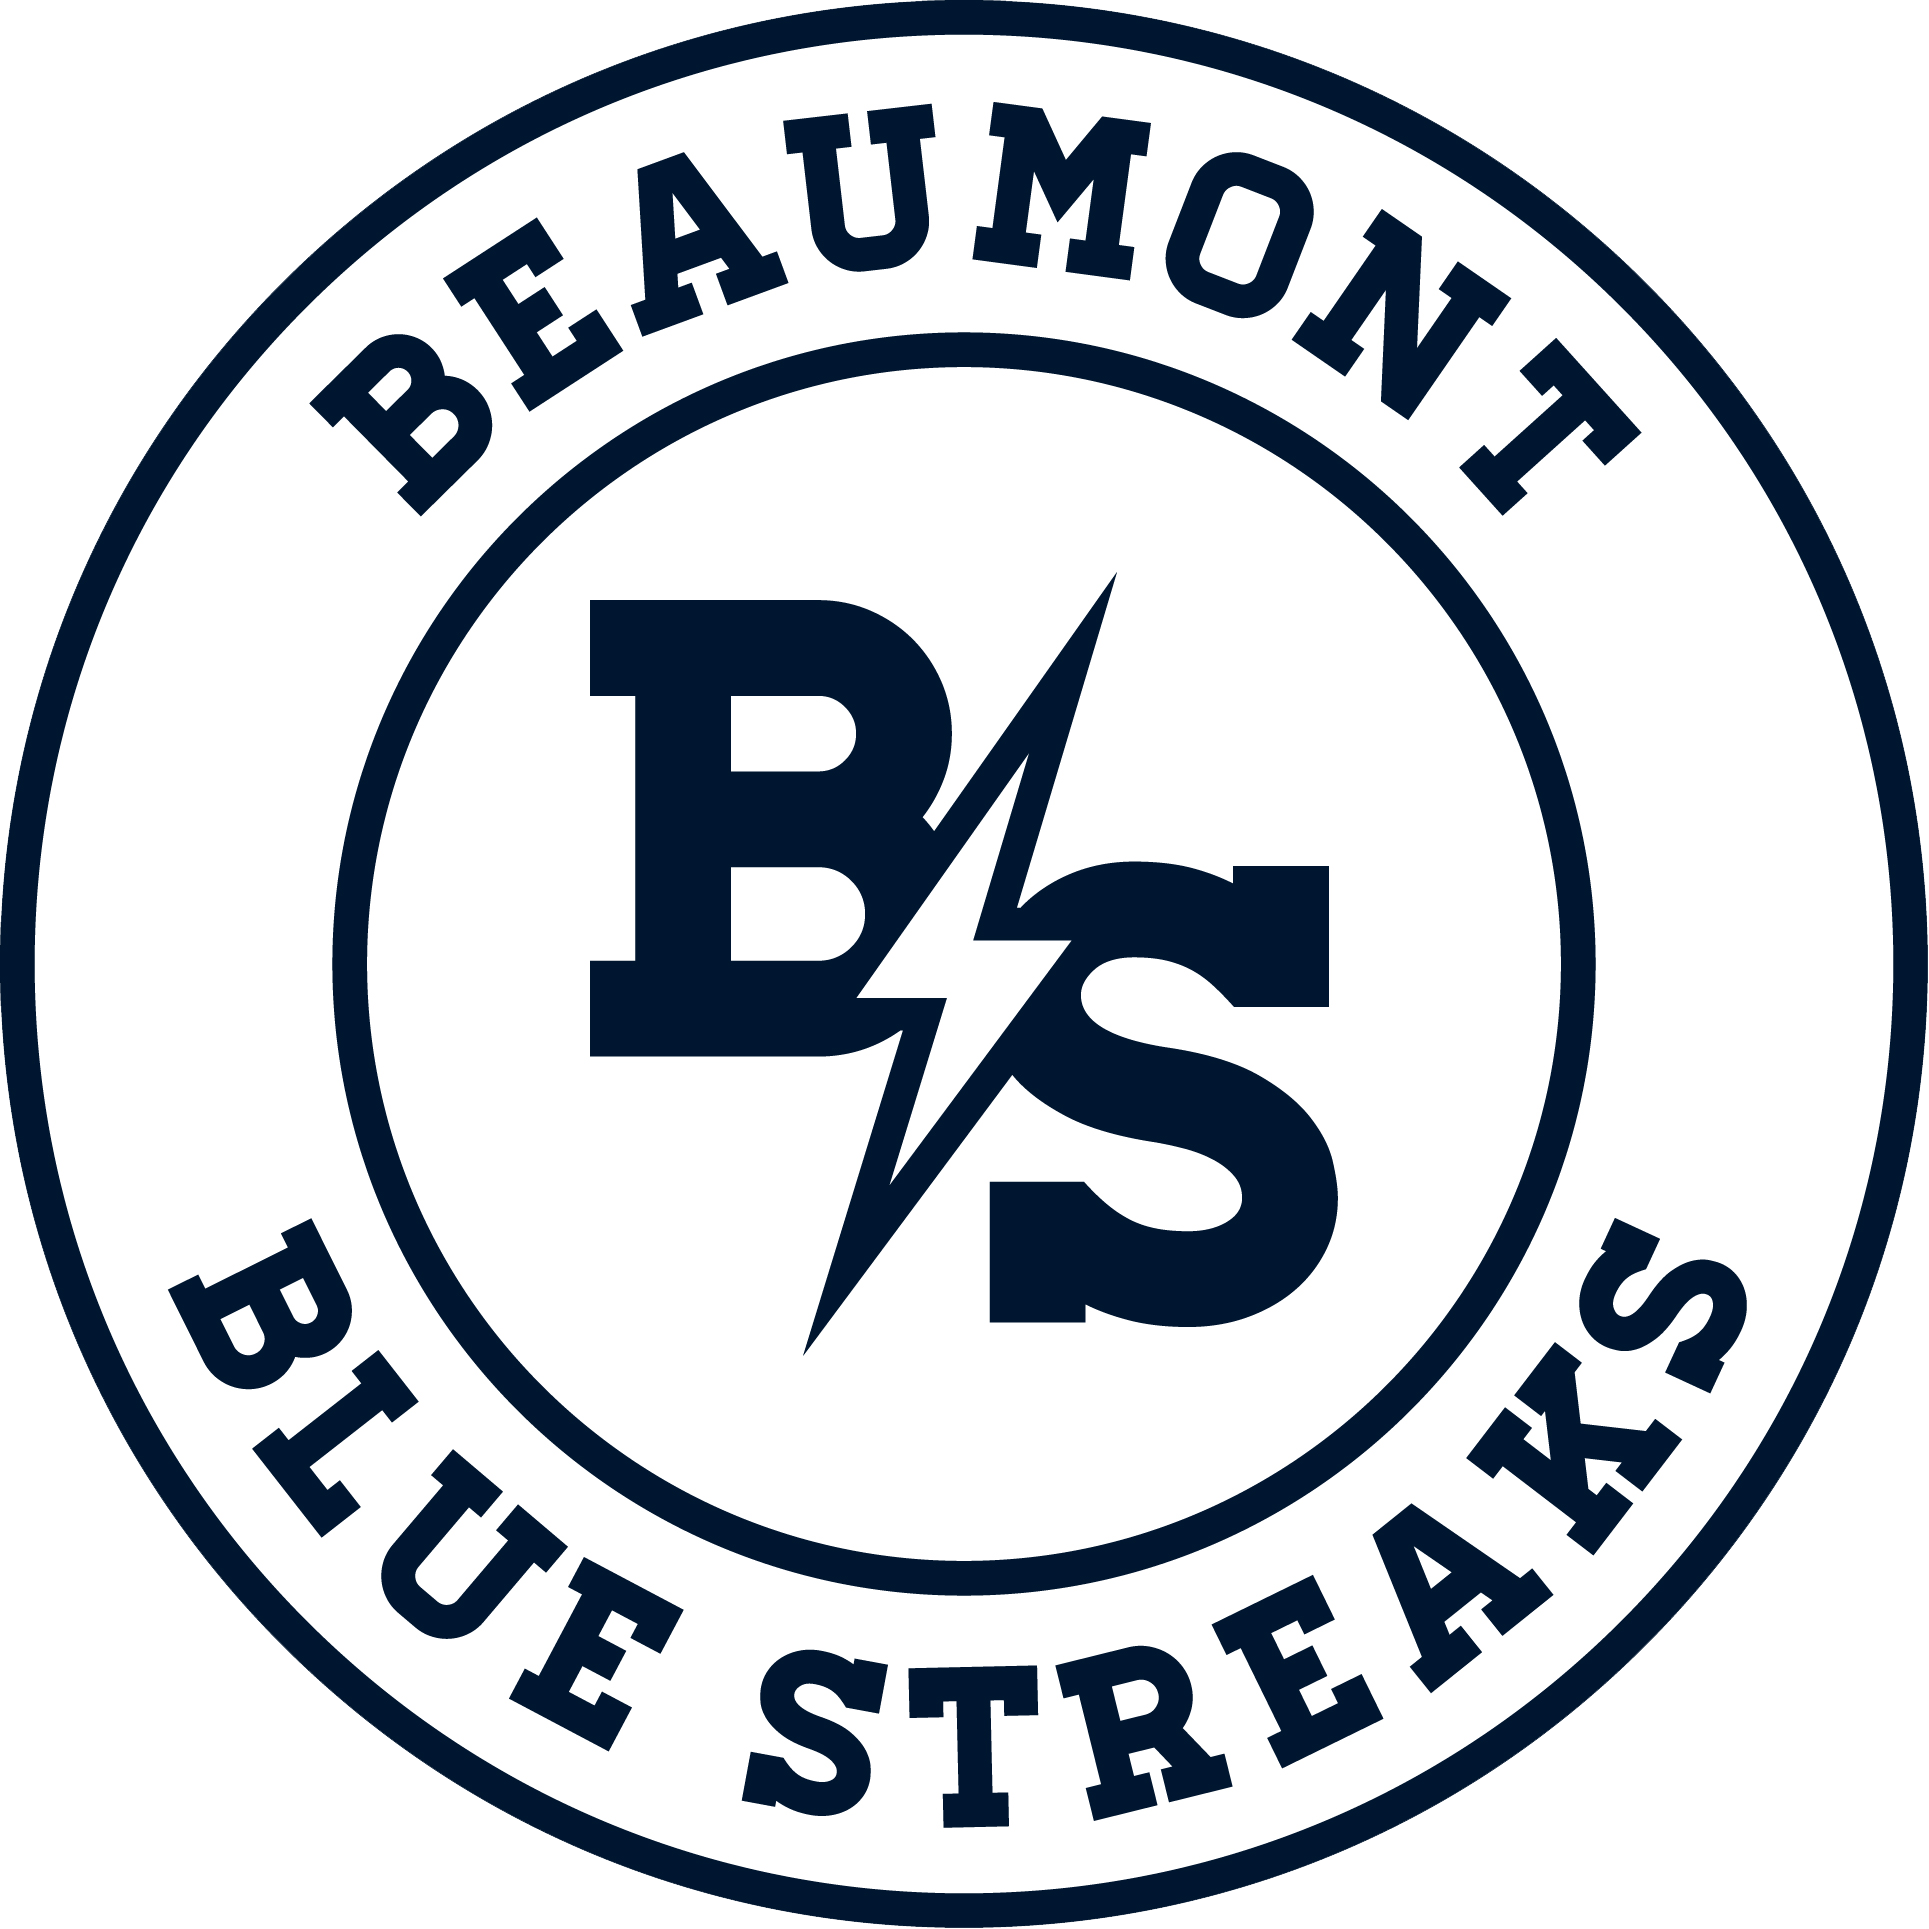 Blue Beaumont Logo - Beaumont School Home Beaumont School Blue Streaks Sports